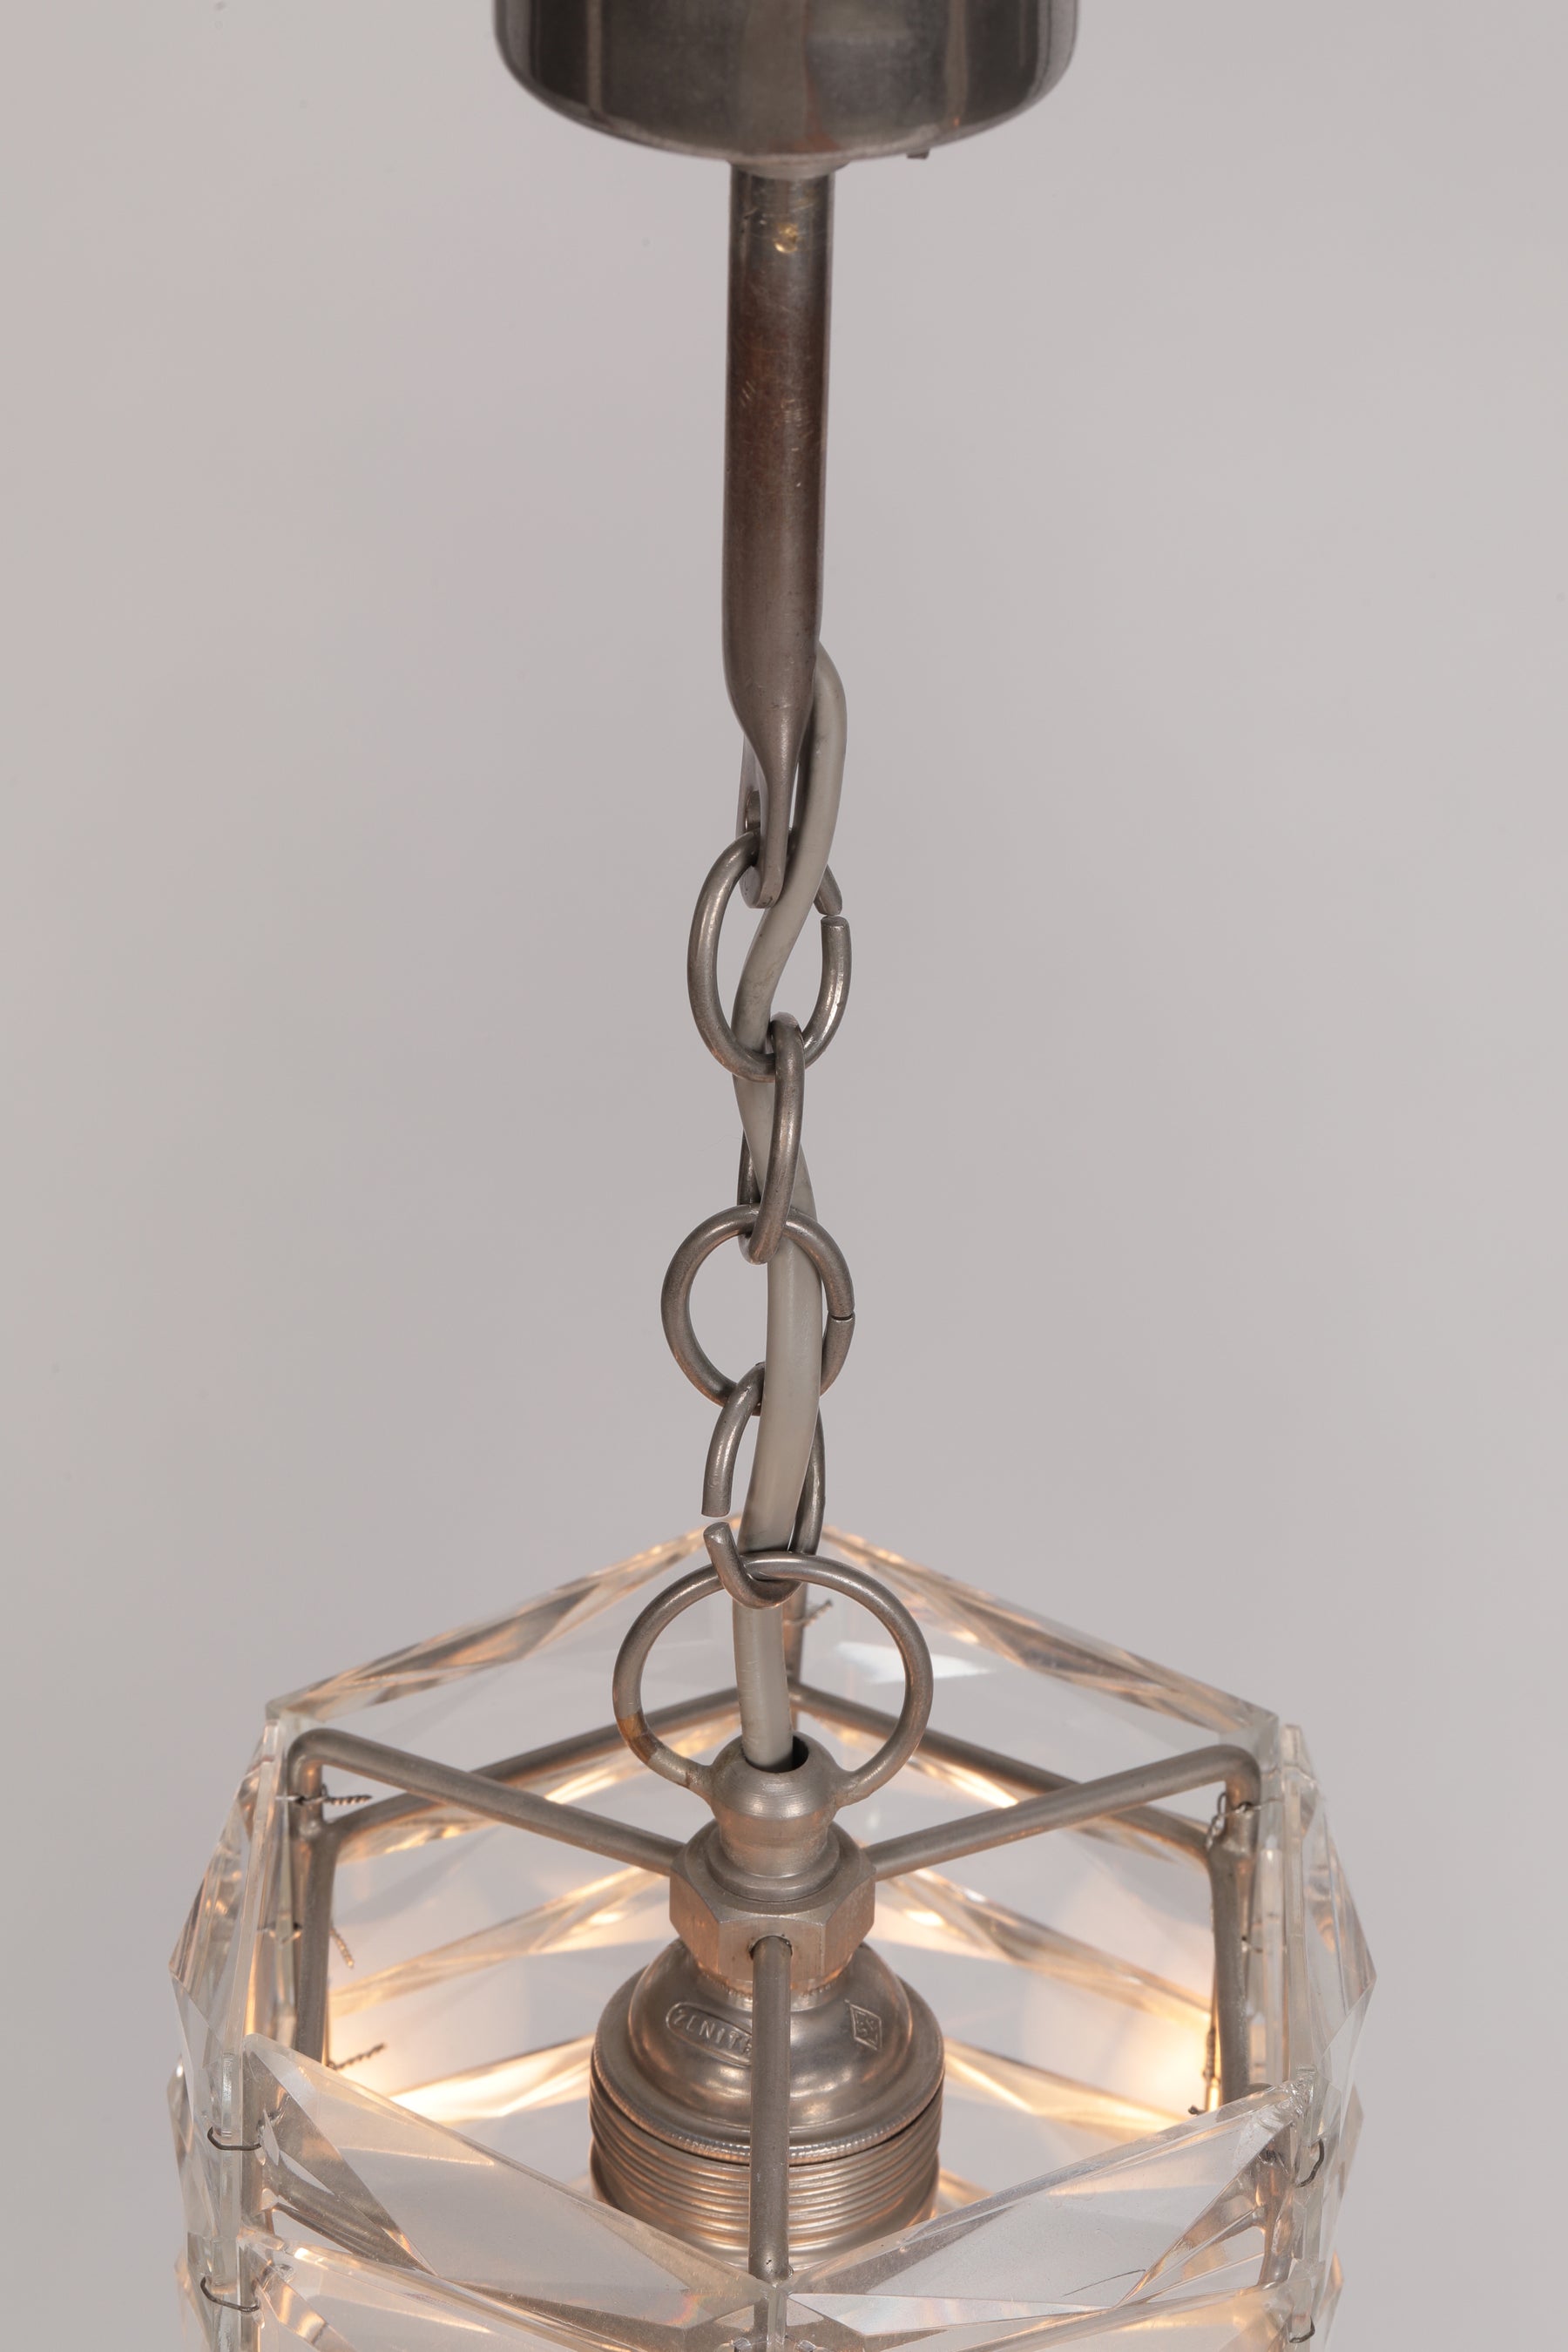 Lampe-Leuchte-Kristall-Glas-60er